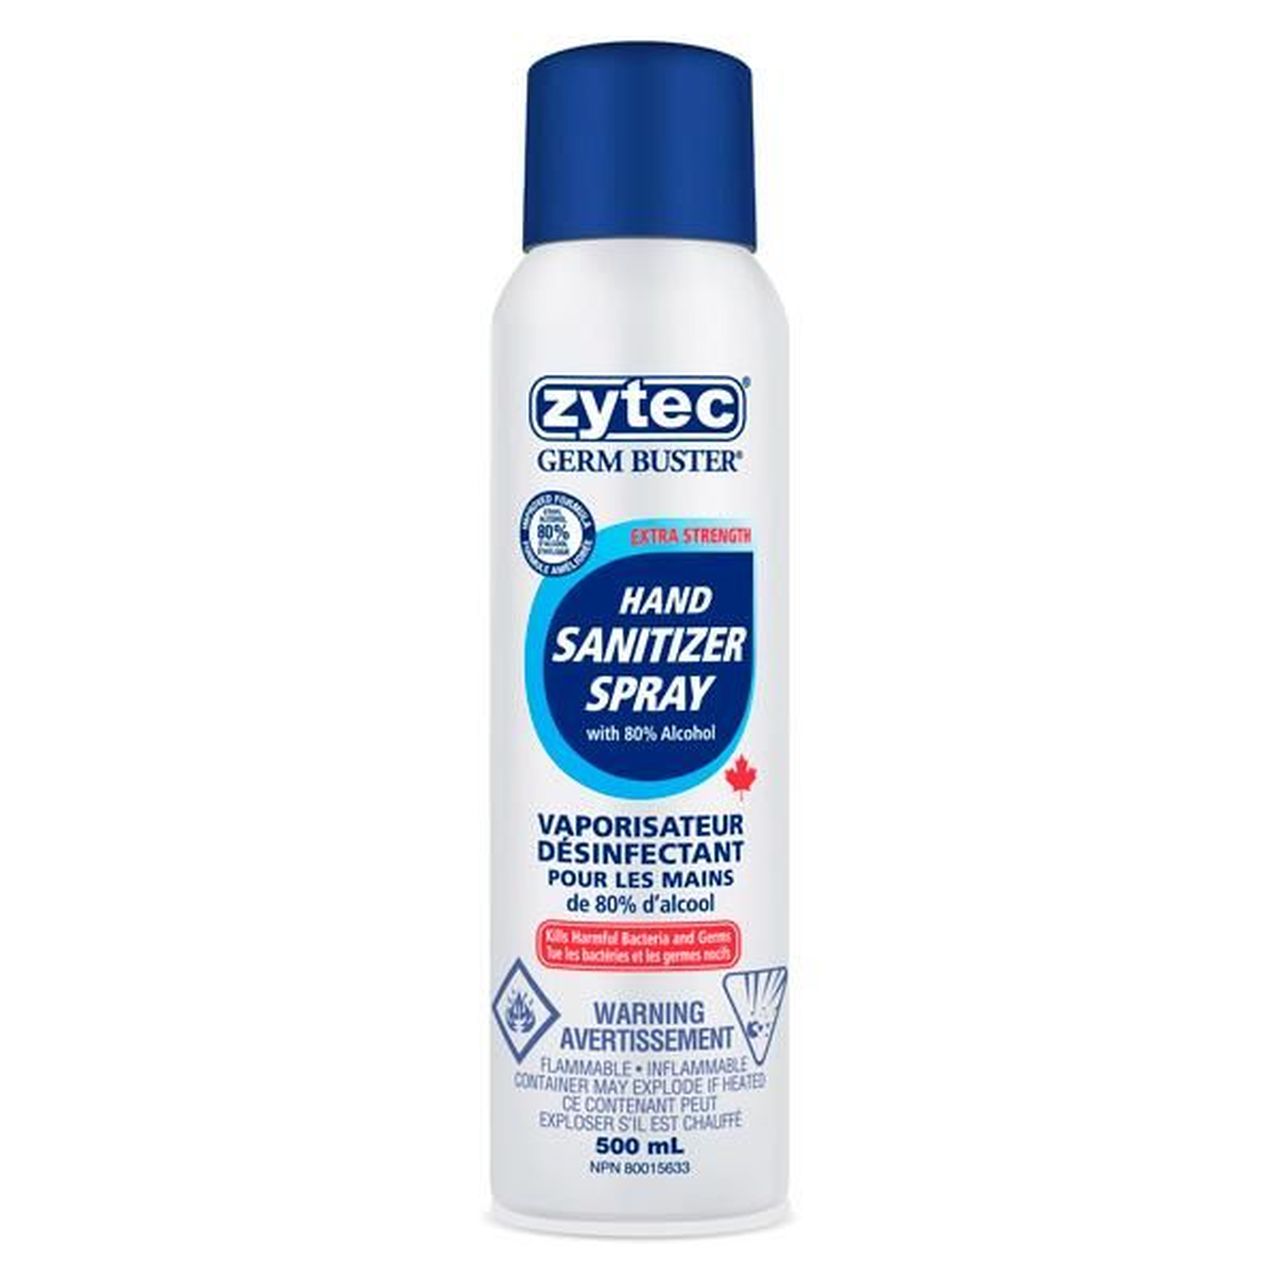 Zytec Germ Buster Extra Strength Hand Sanitizer Spray, 80% Alcohol, 500 mL